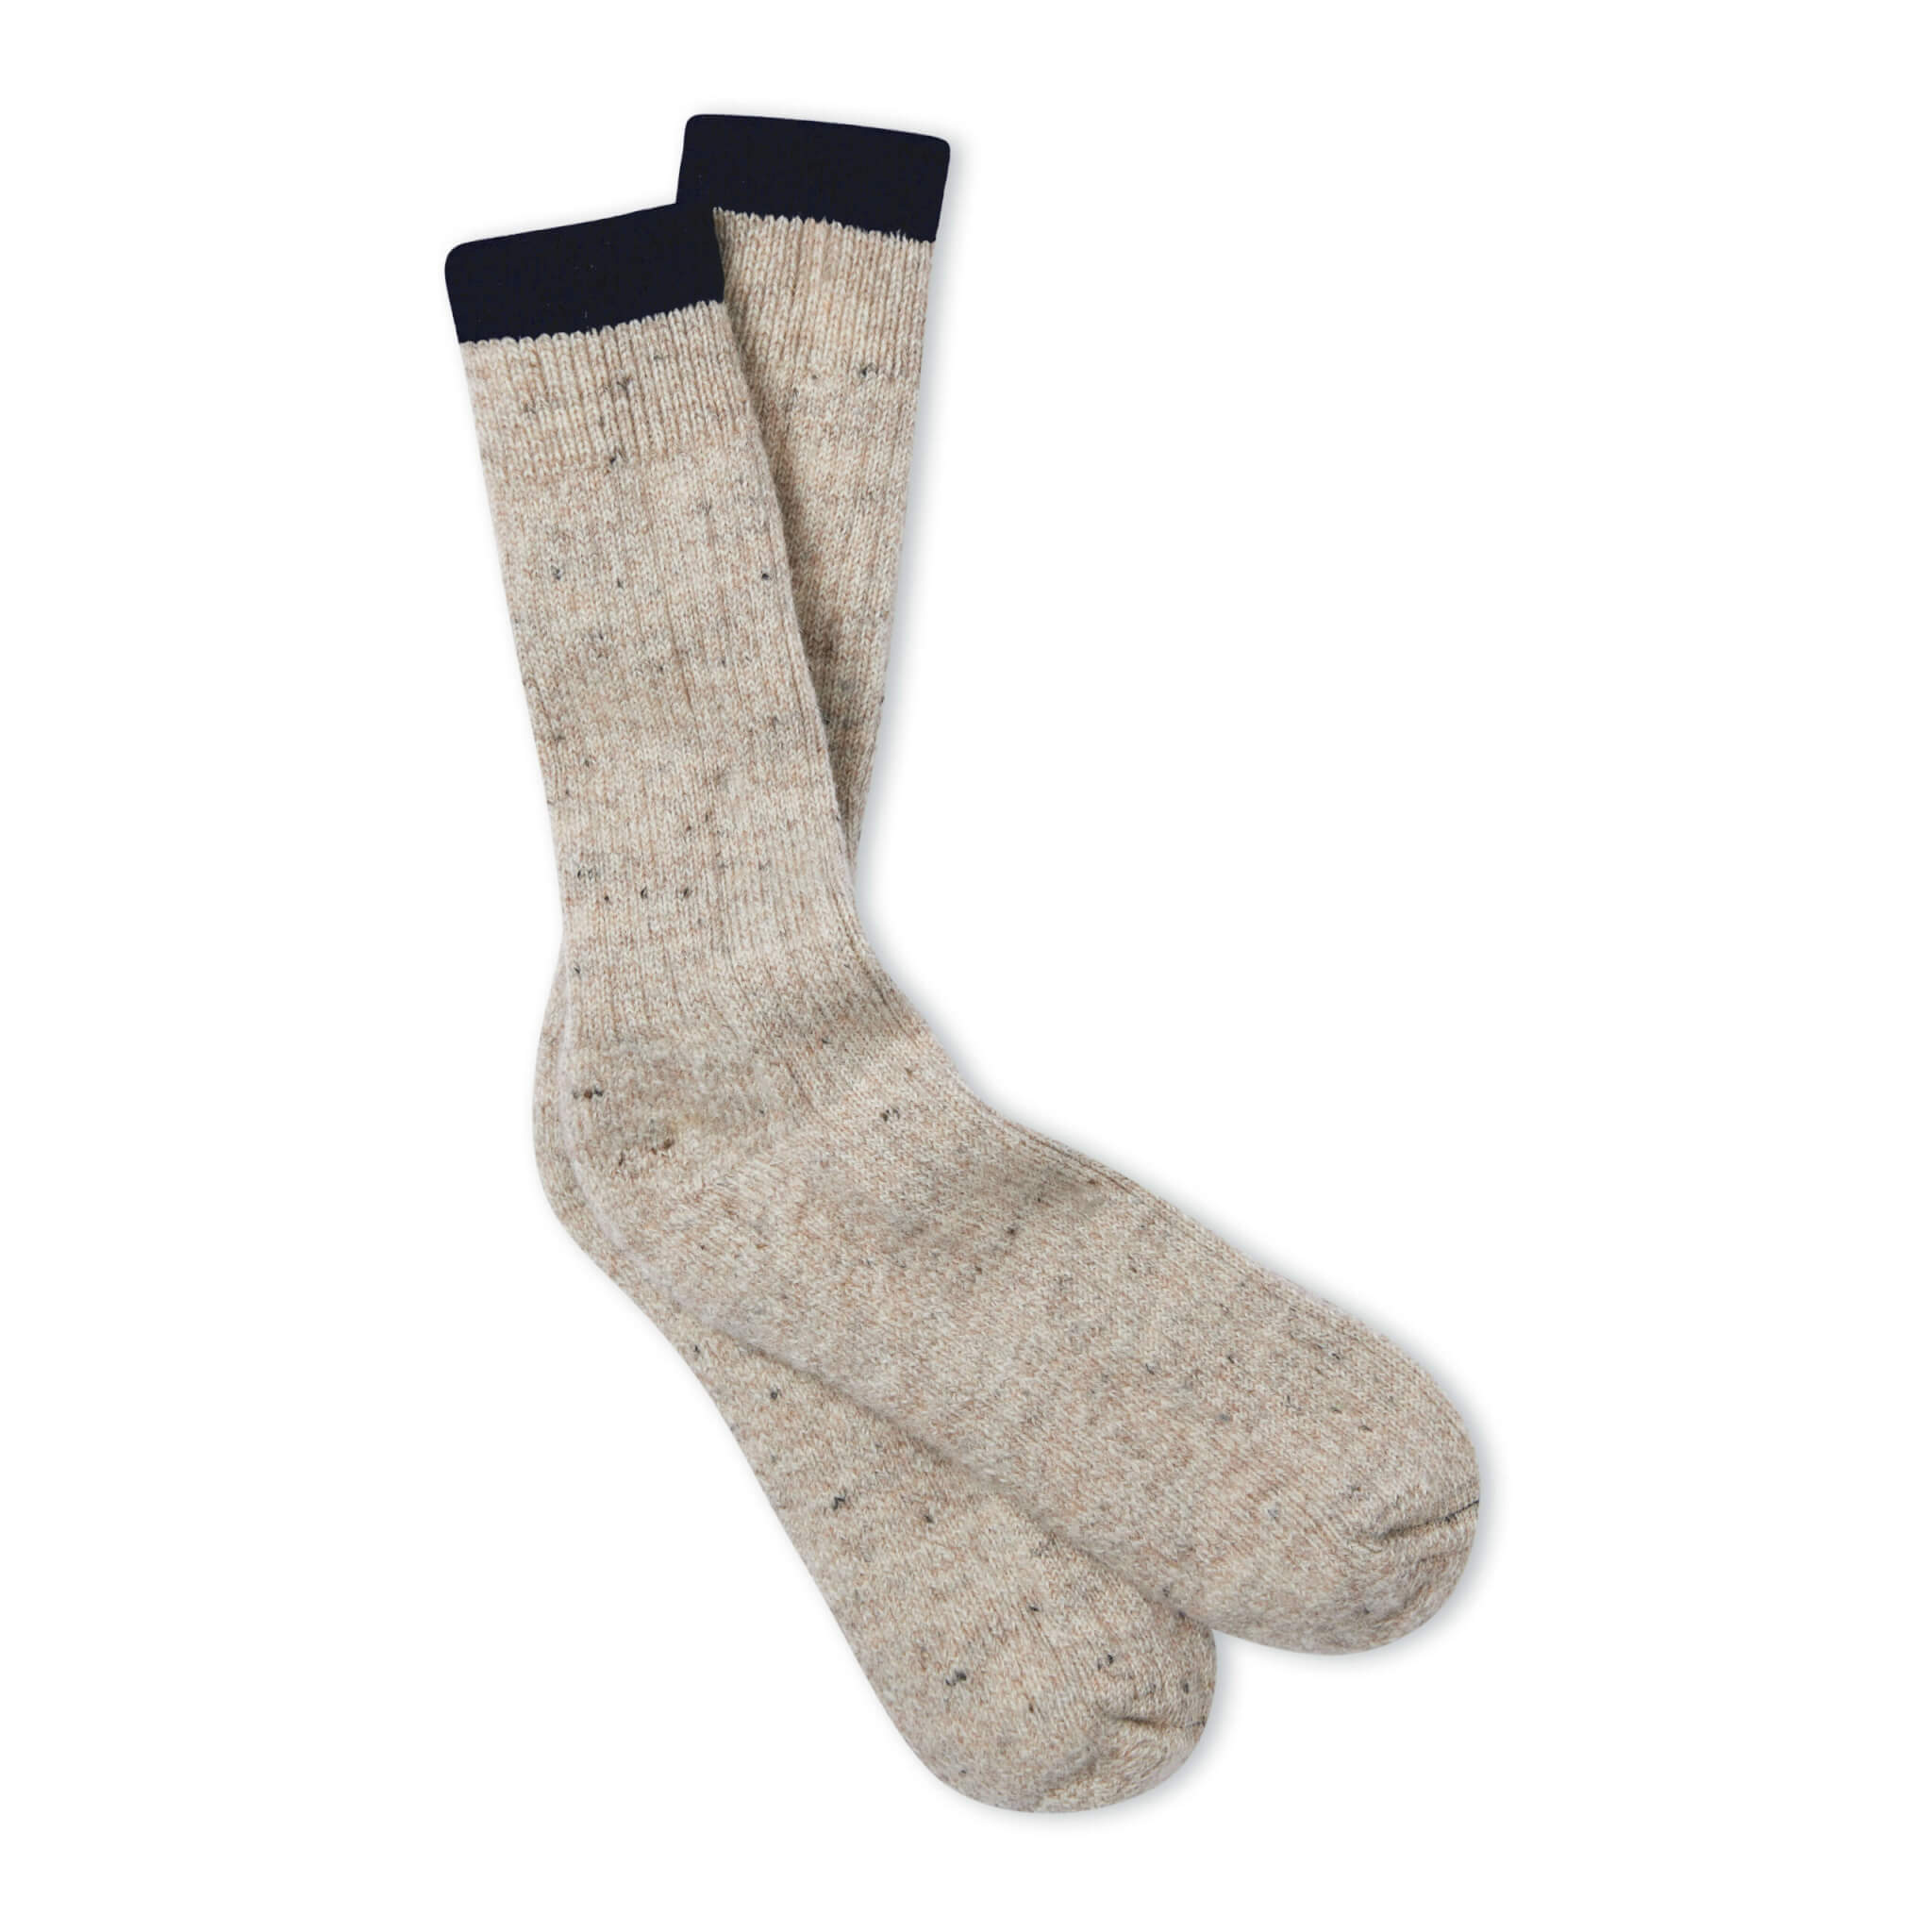 Skiddaw boot socks cream/navy